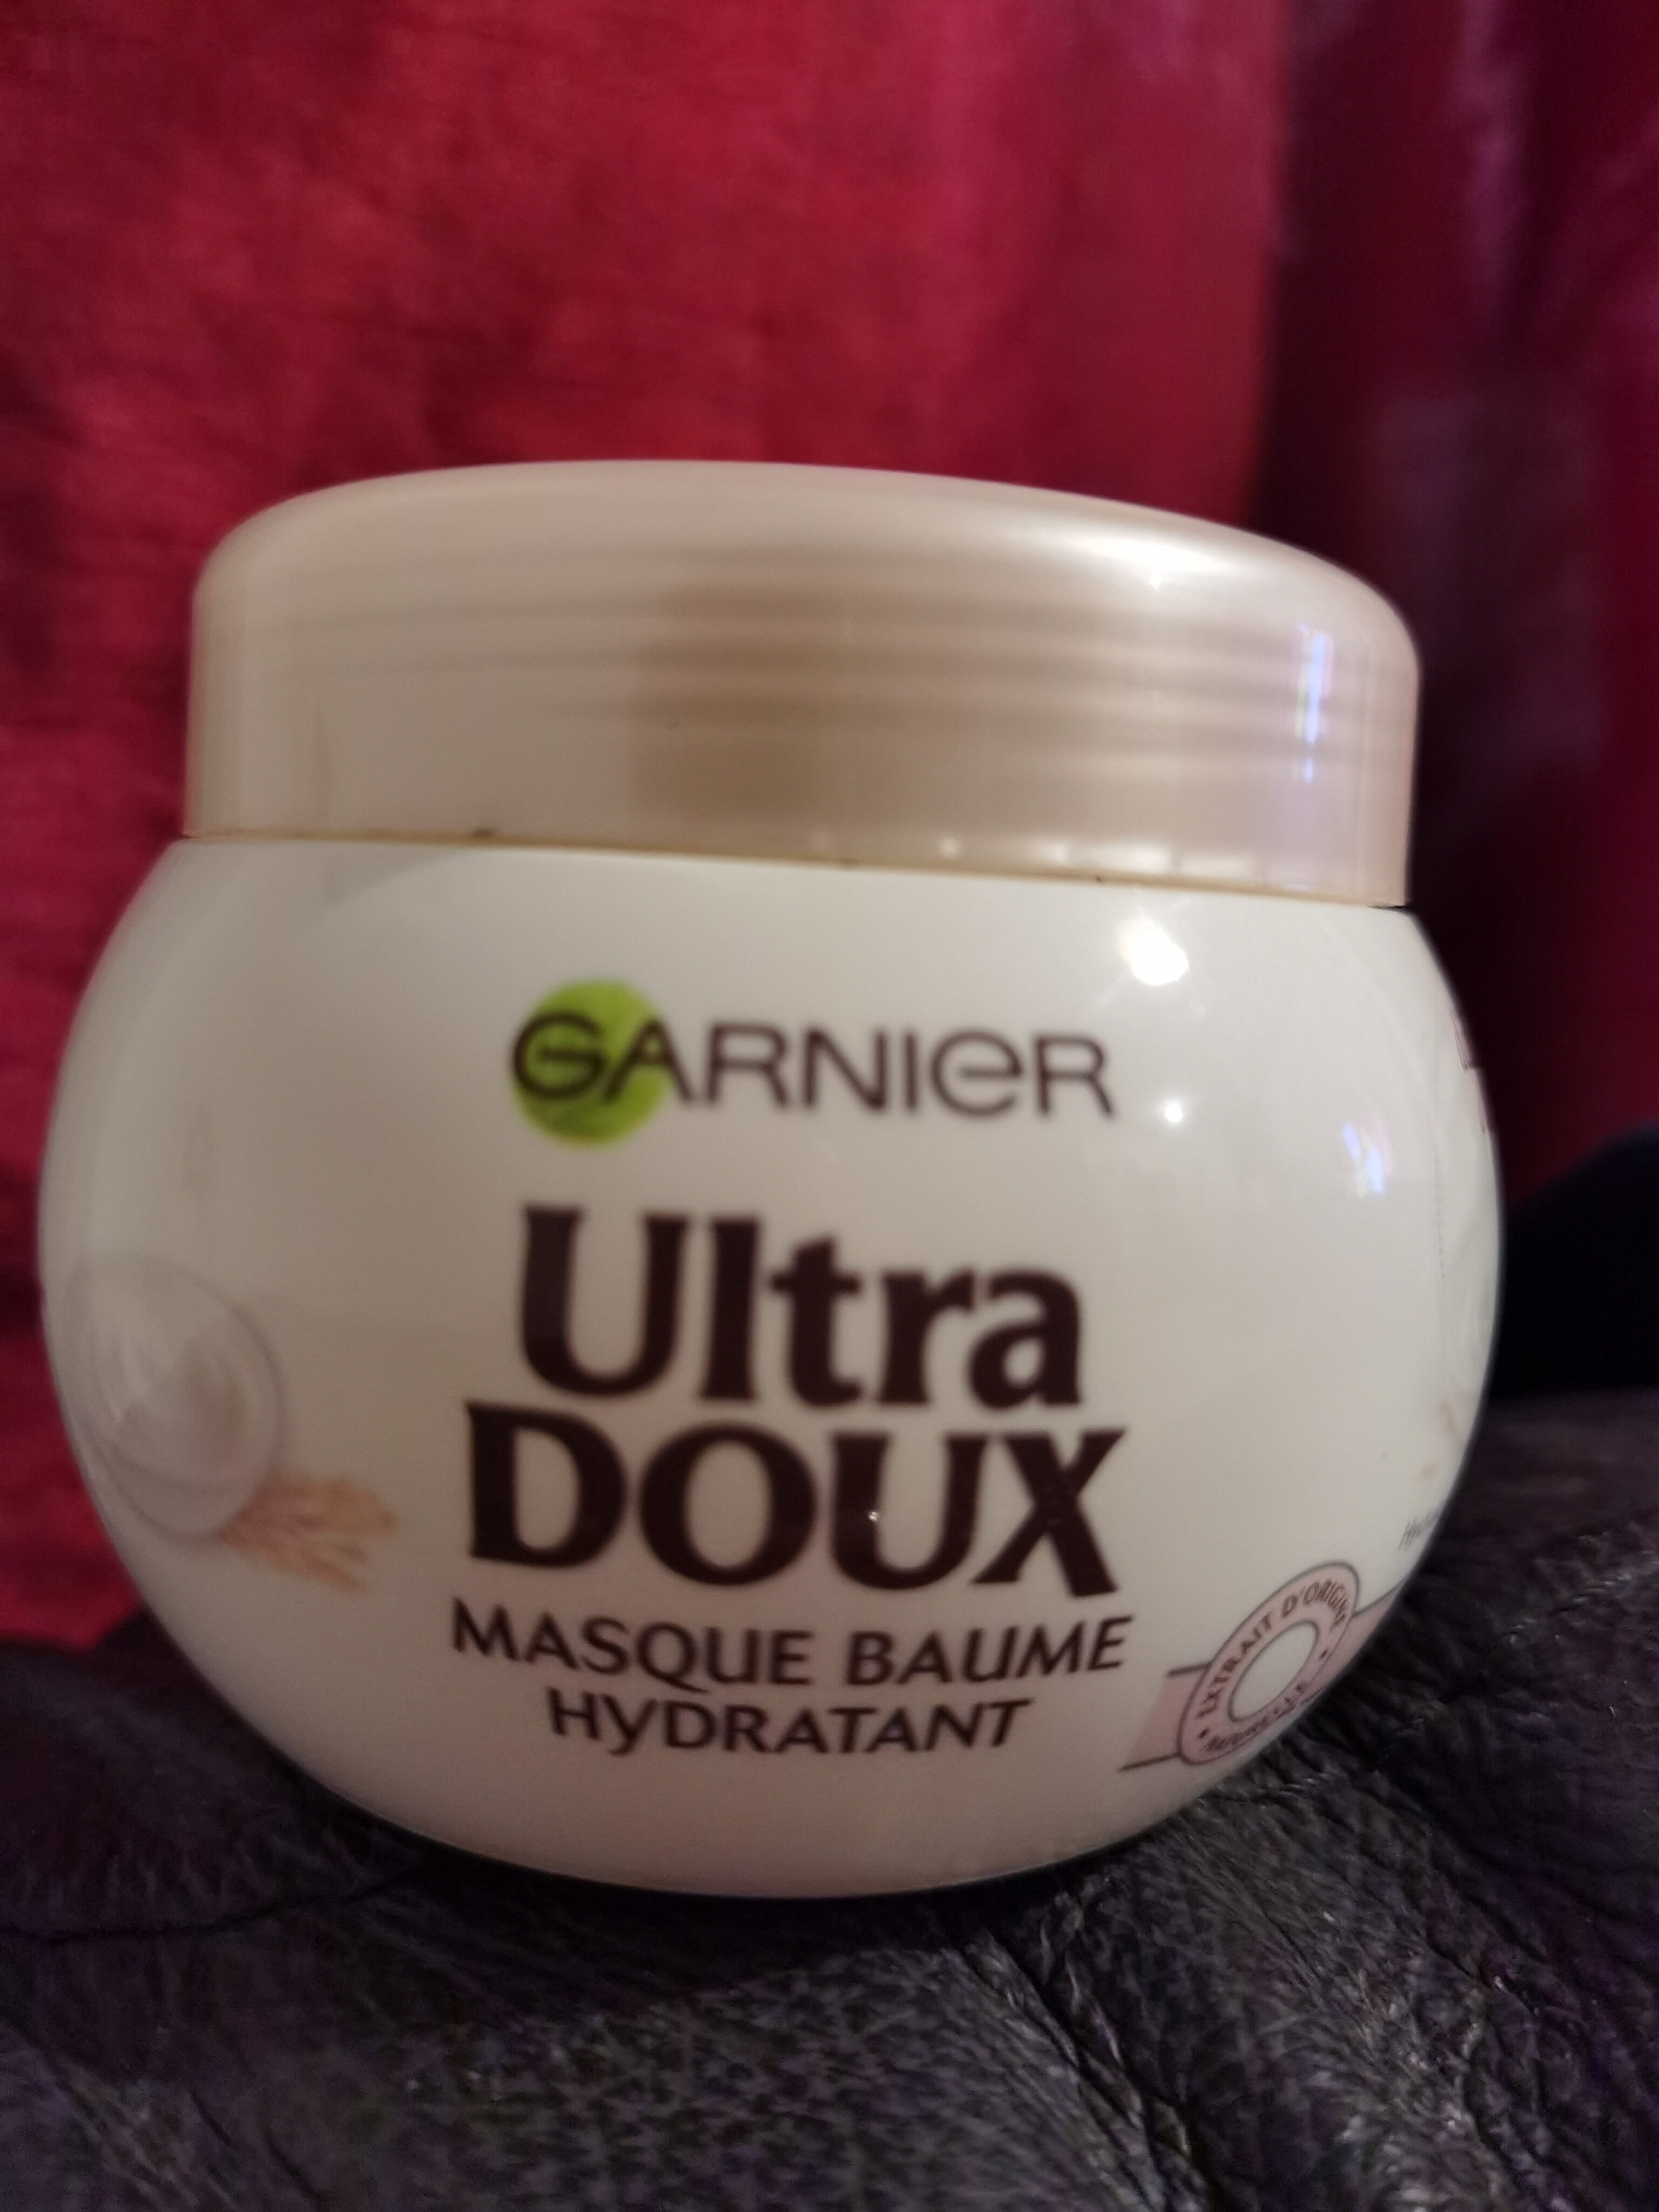 Ultra doux masque baume hydratant - Продукт - fr